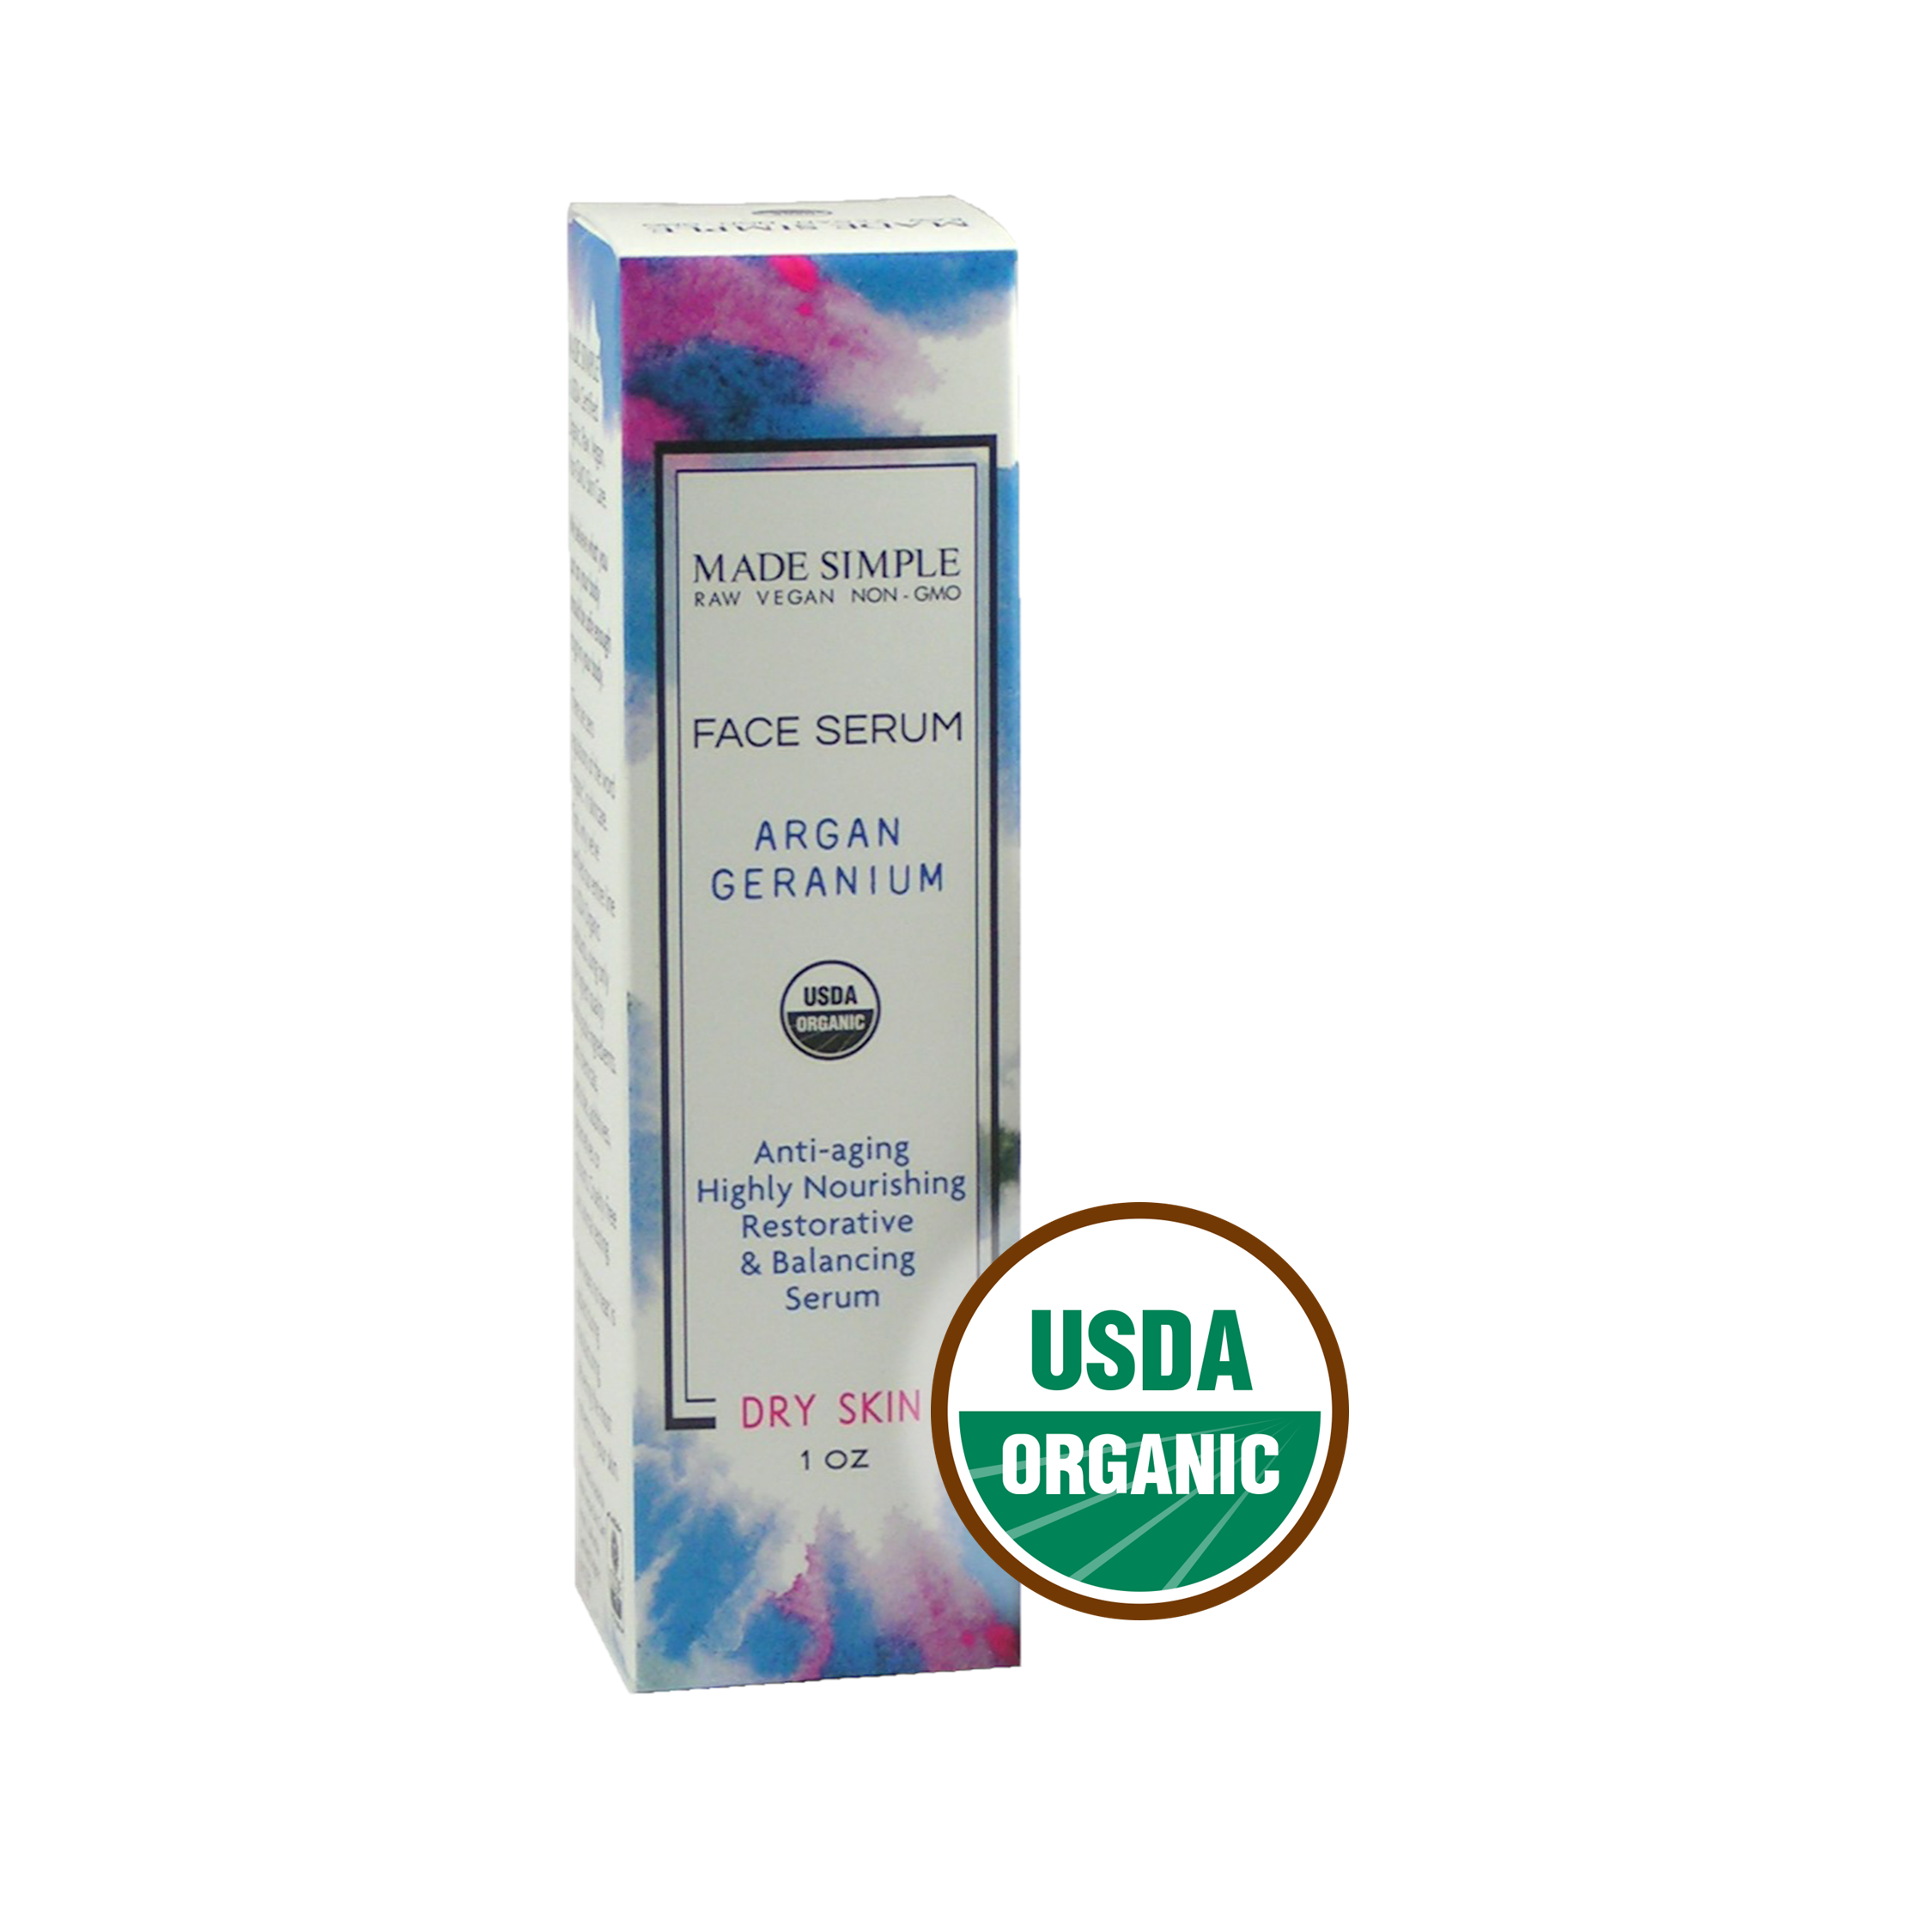 Made Simple Skin Care Argan Geranium Face Serum USDA Certified Organic Raw Vegan NonGMO